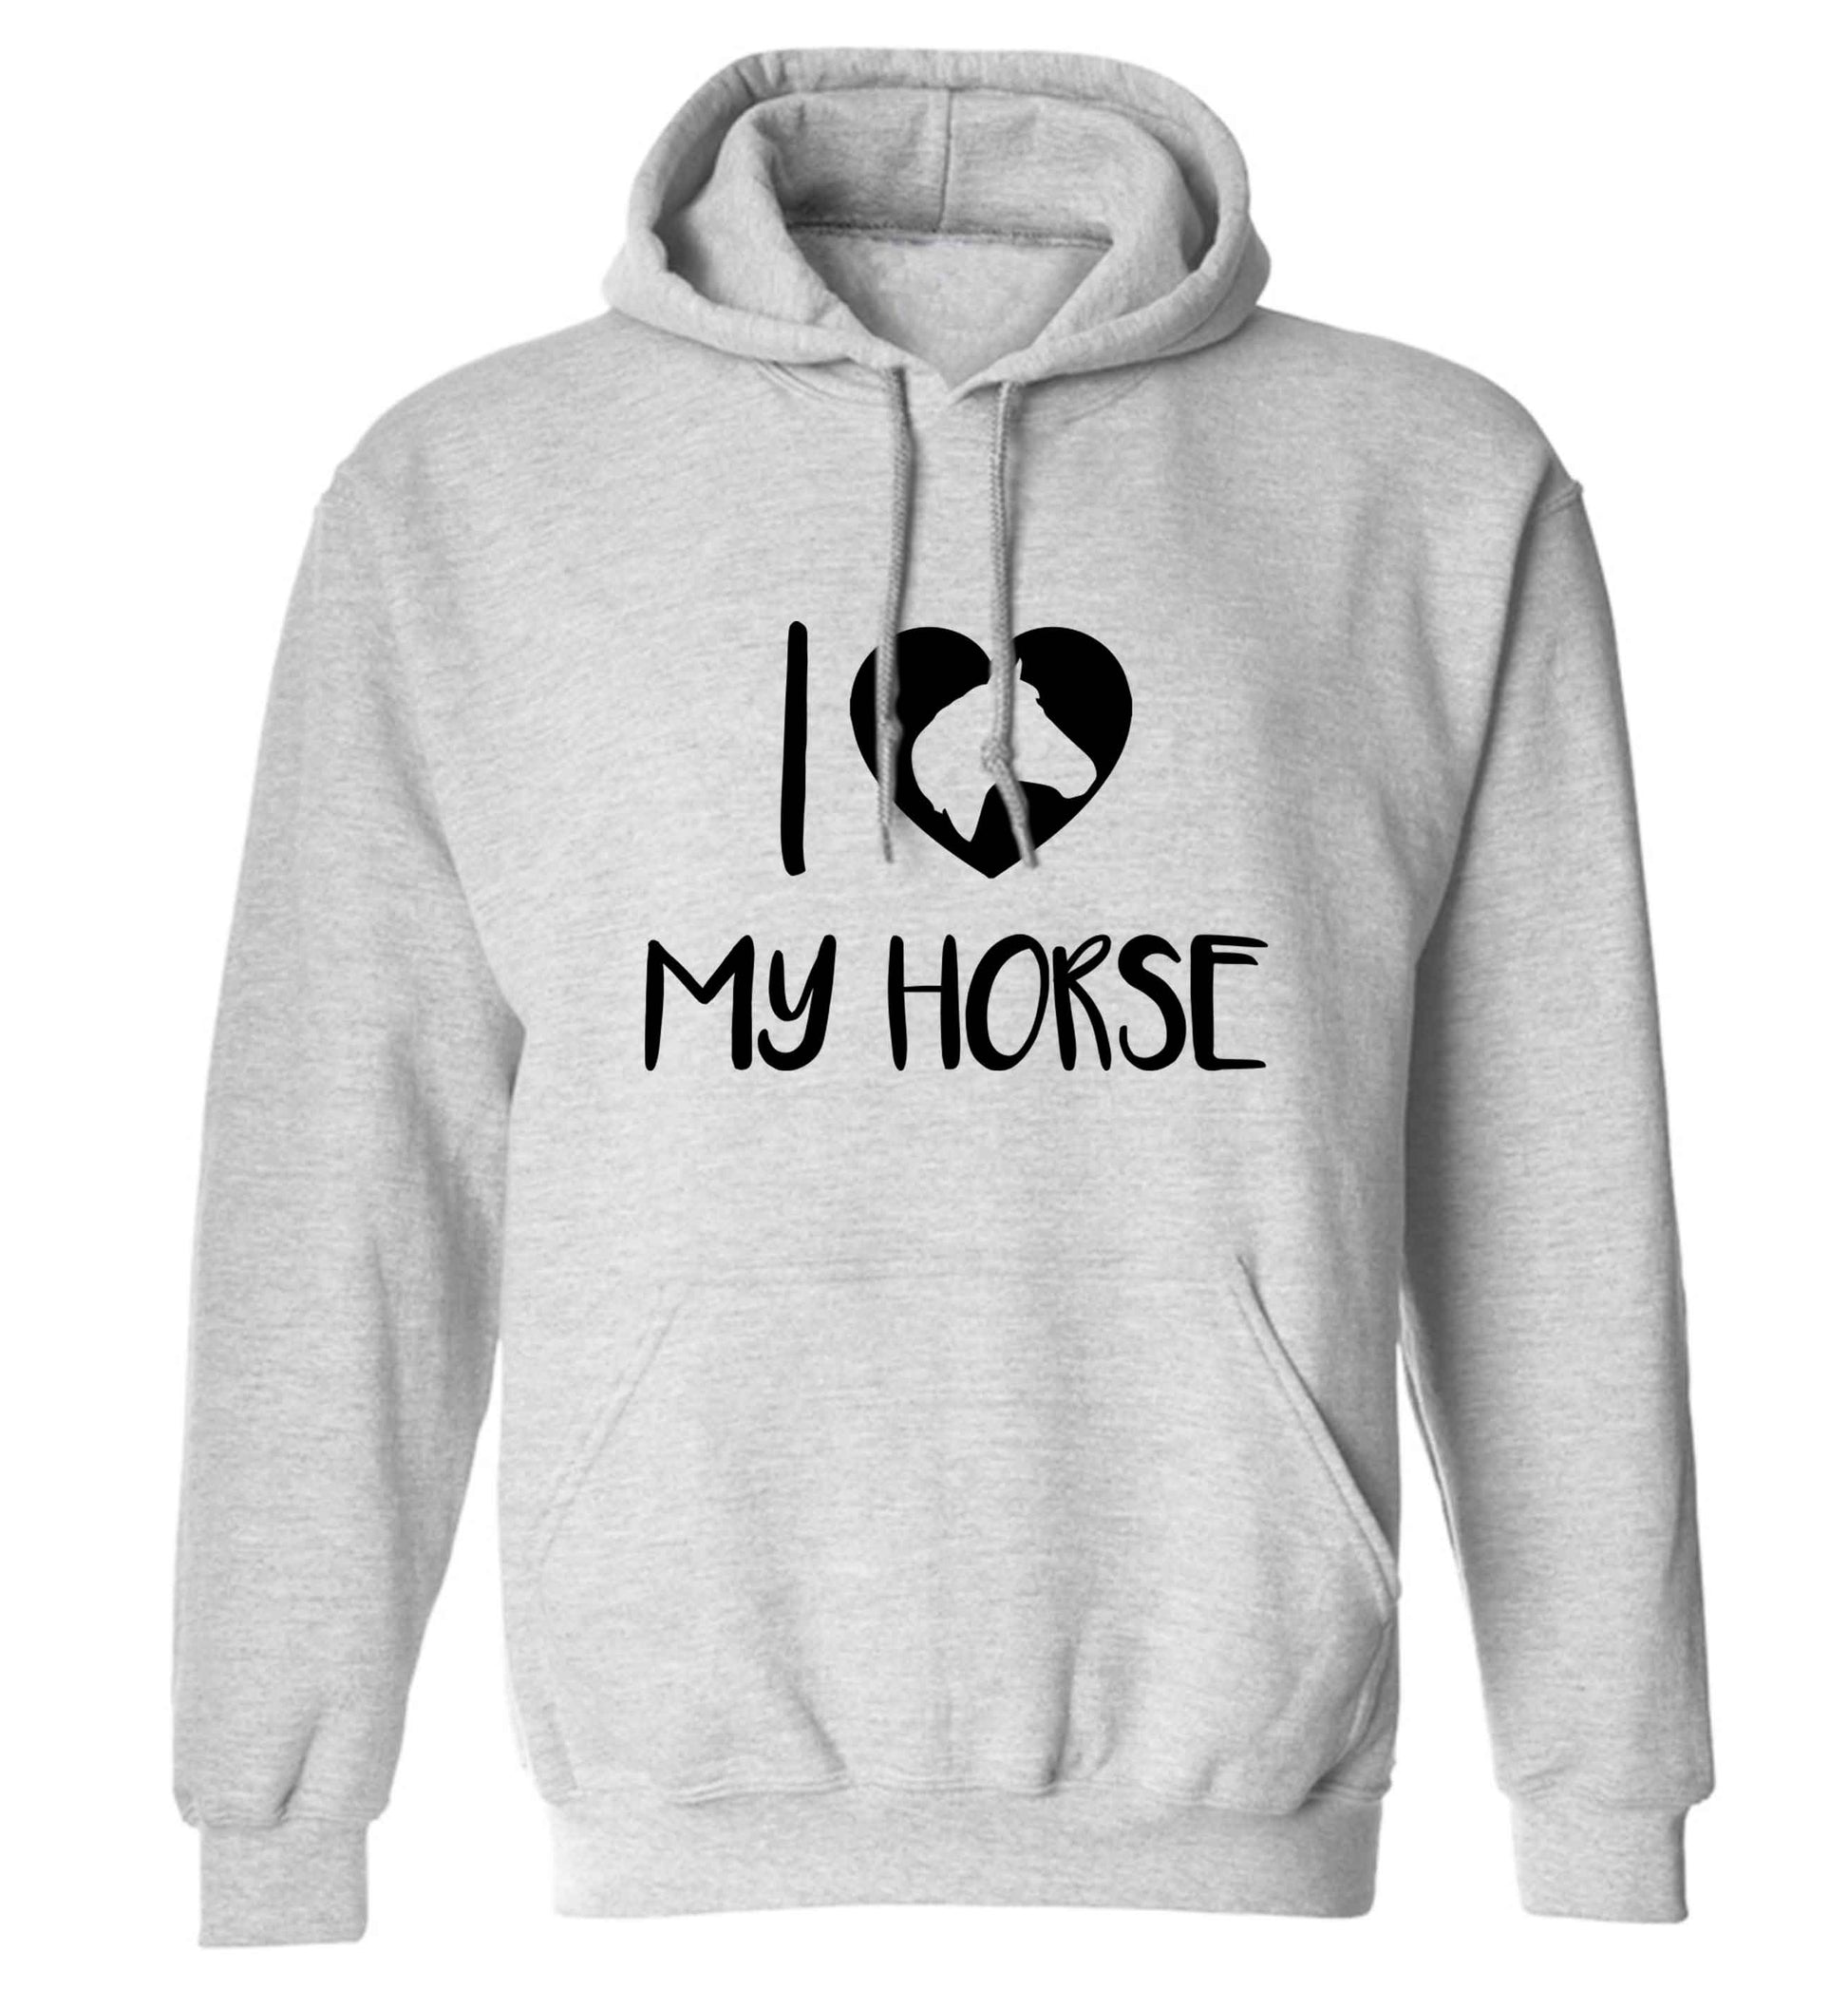 I love my horse adults unisex grey hoodie 2XL